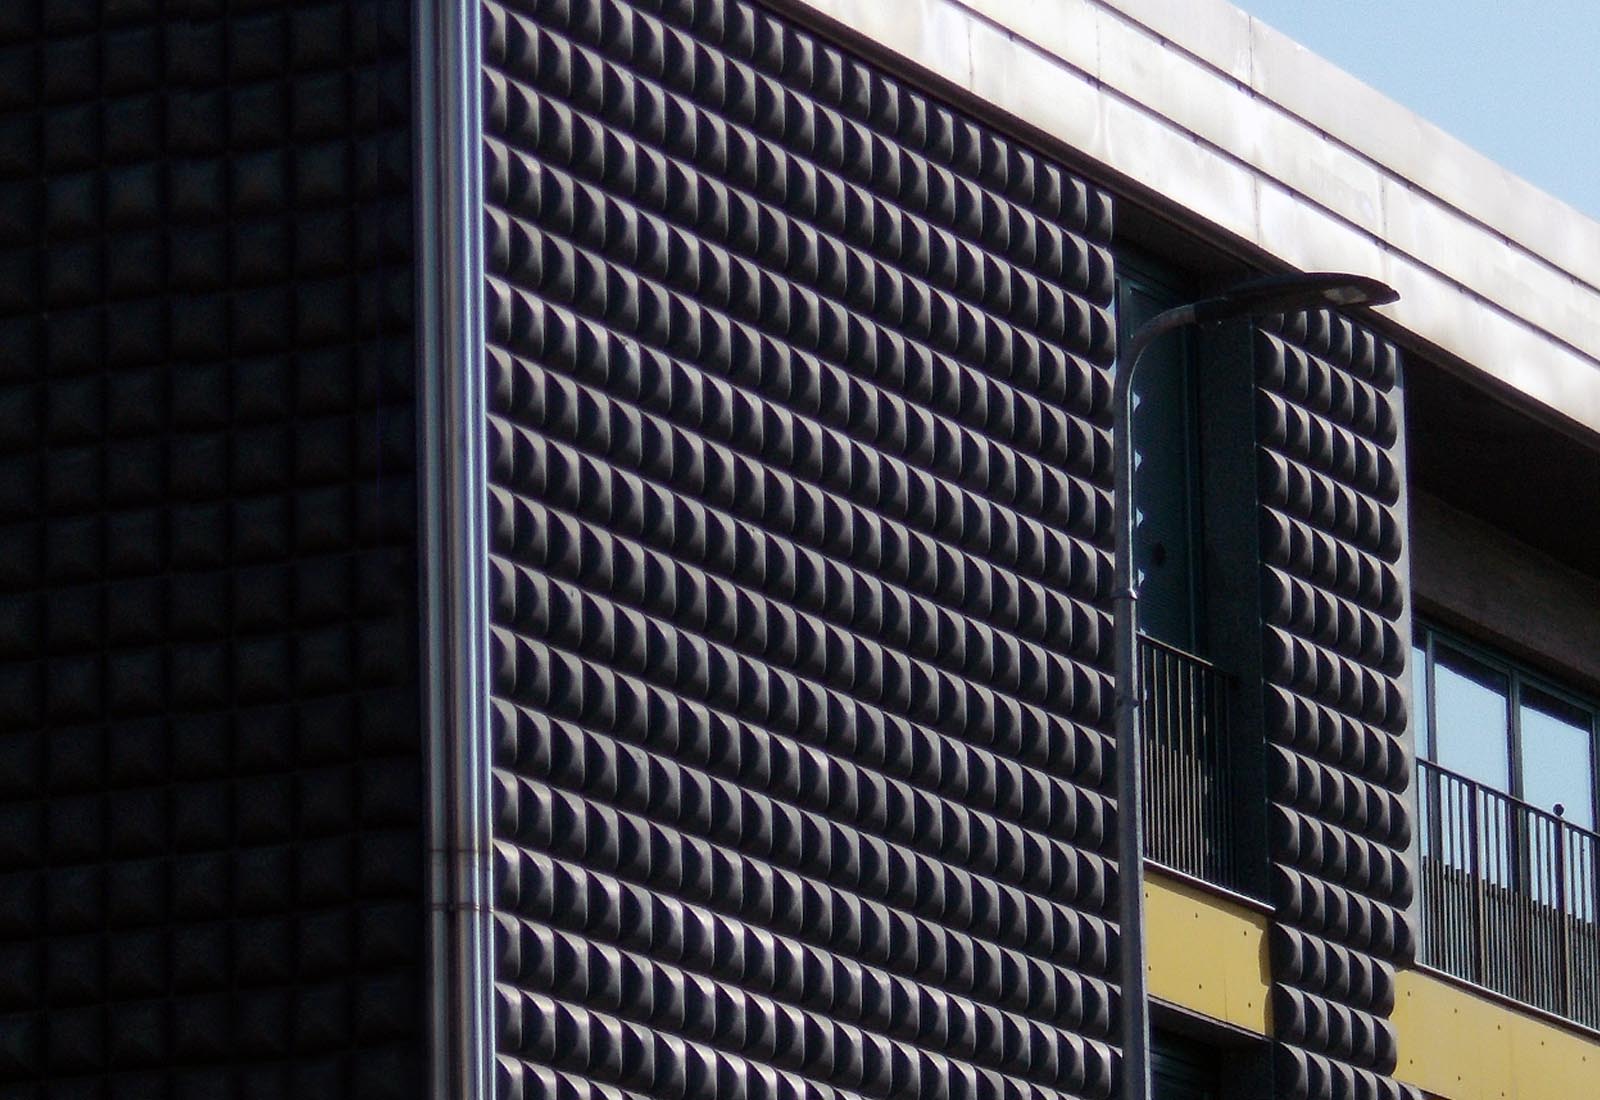 Building 25 Politecnico di Milano - Detail of the south facade